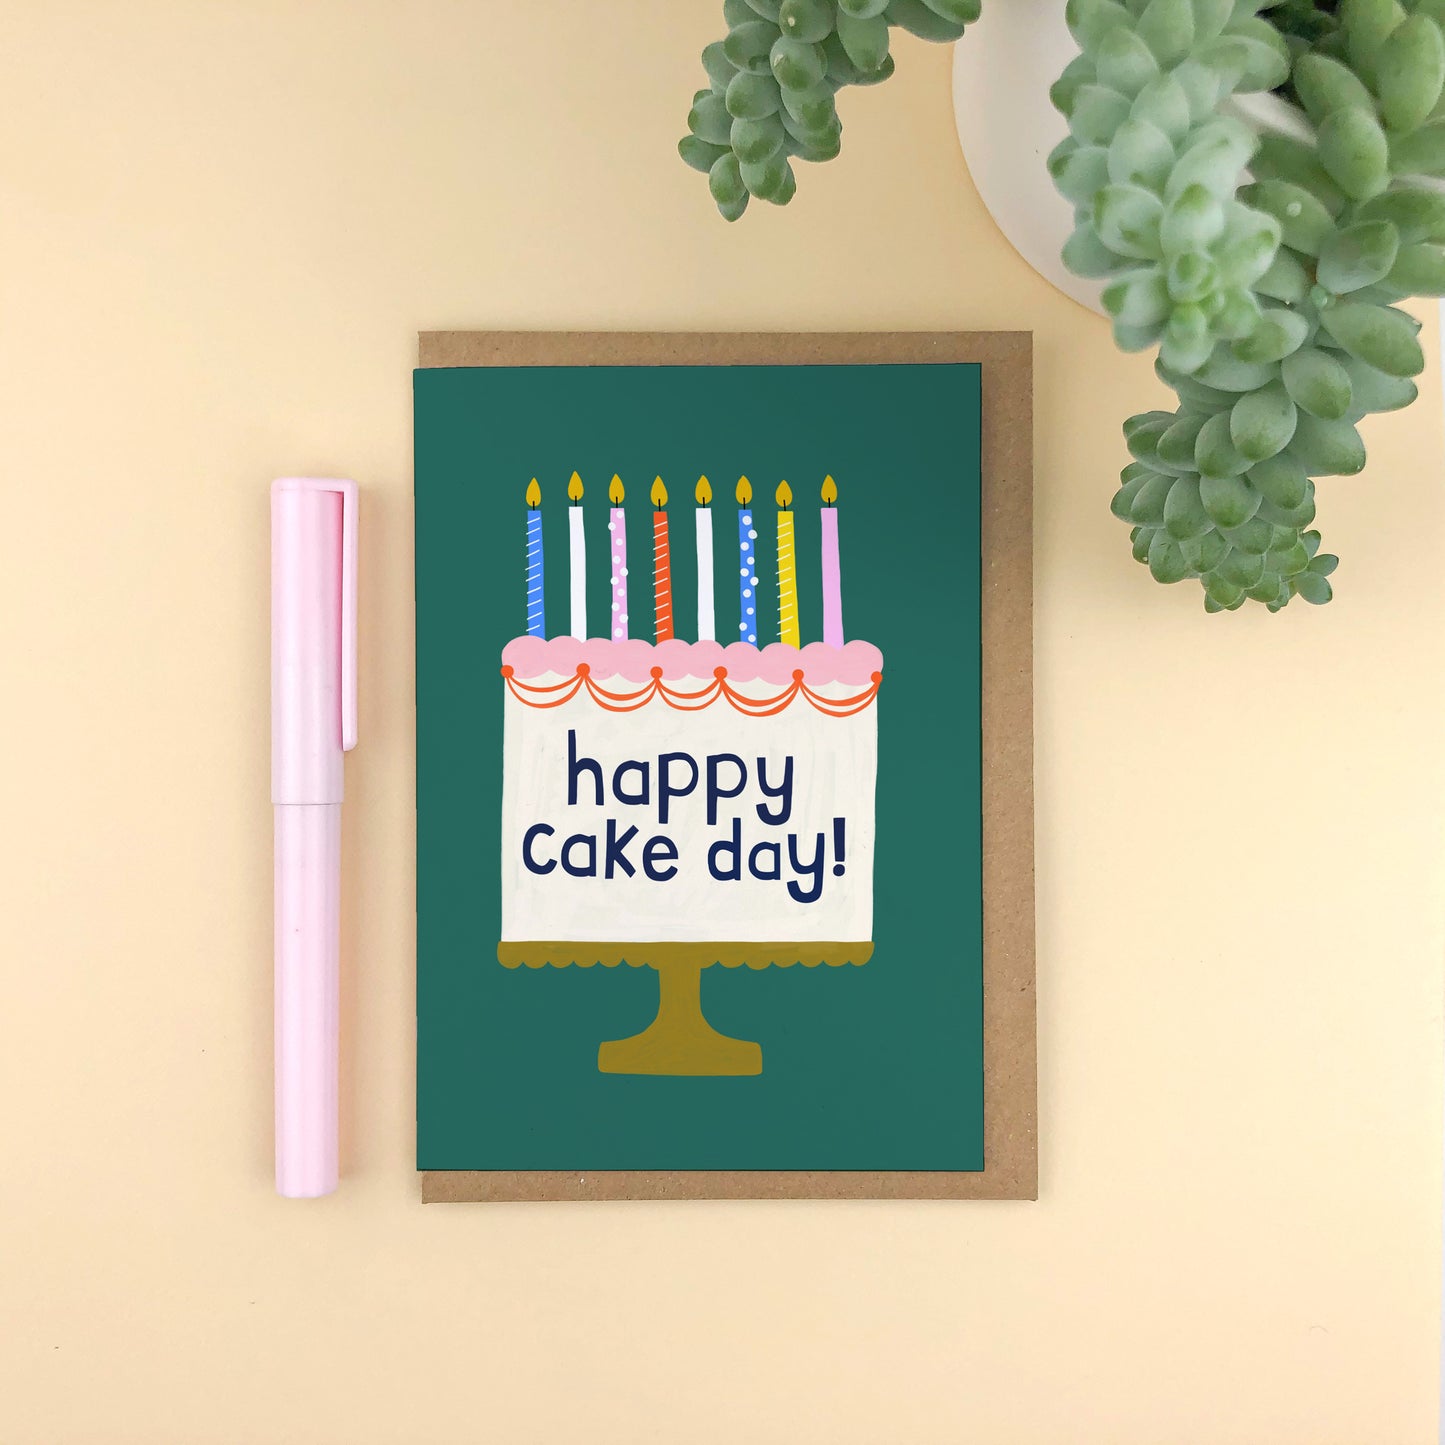 Happy Cake Day! Cake Stand Birthday Card